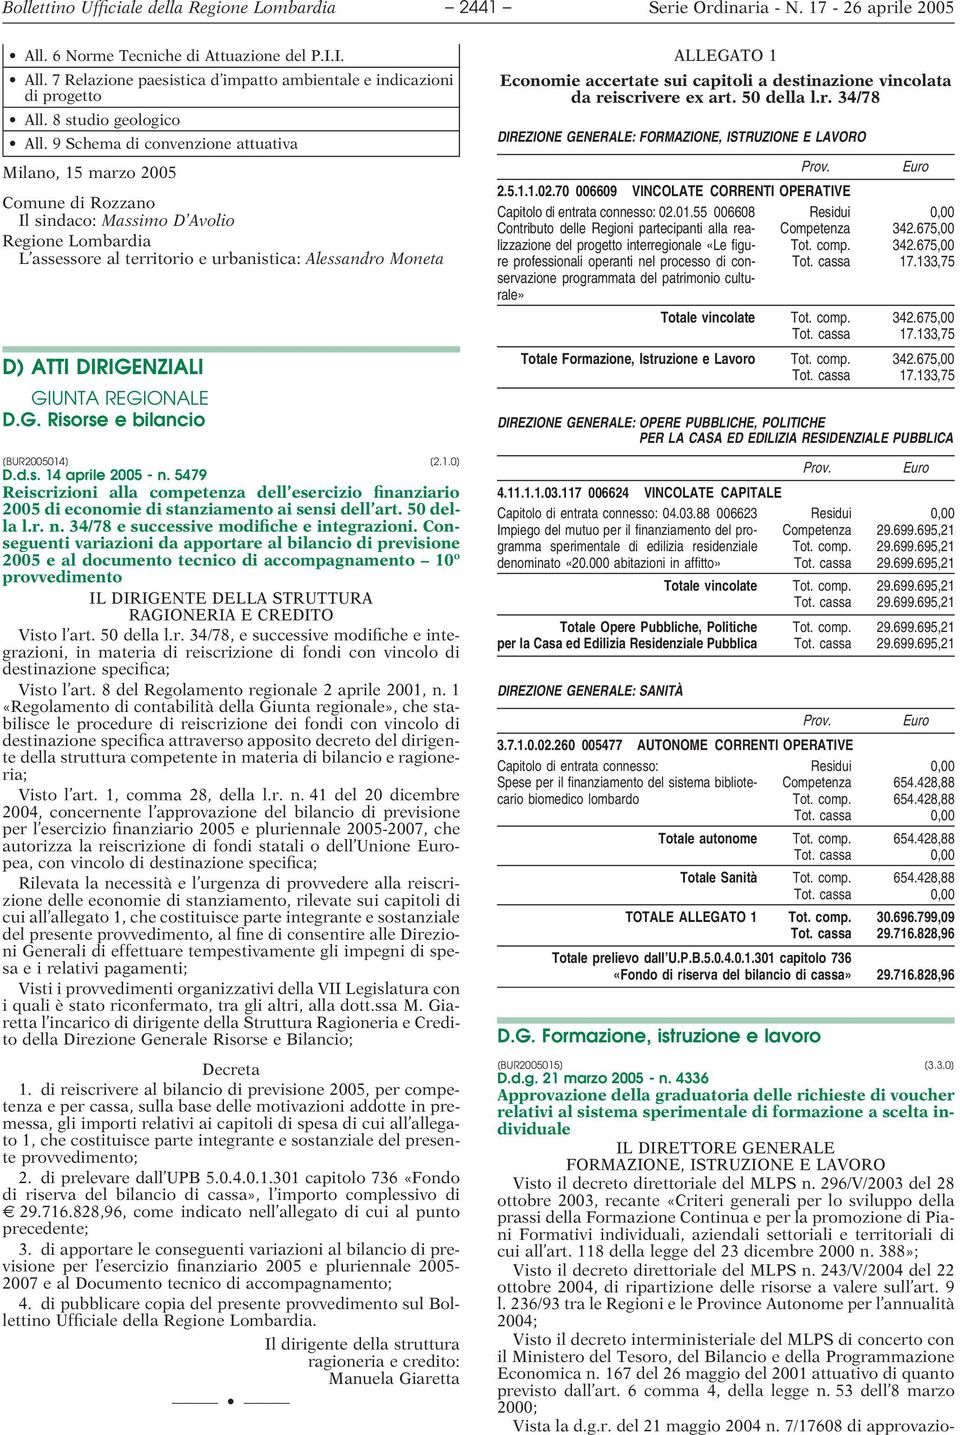 DIRIGENZIALI GIUNTA REGIONALE D.G. Risorse e bilancio [BUR2005014] [2.1.0] D.d.s. 14 aprile 2005 - n.